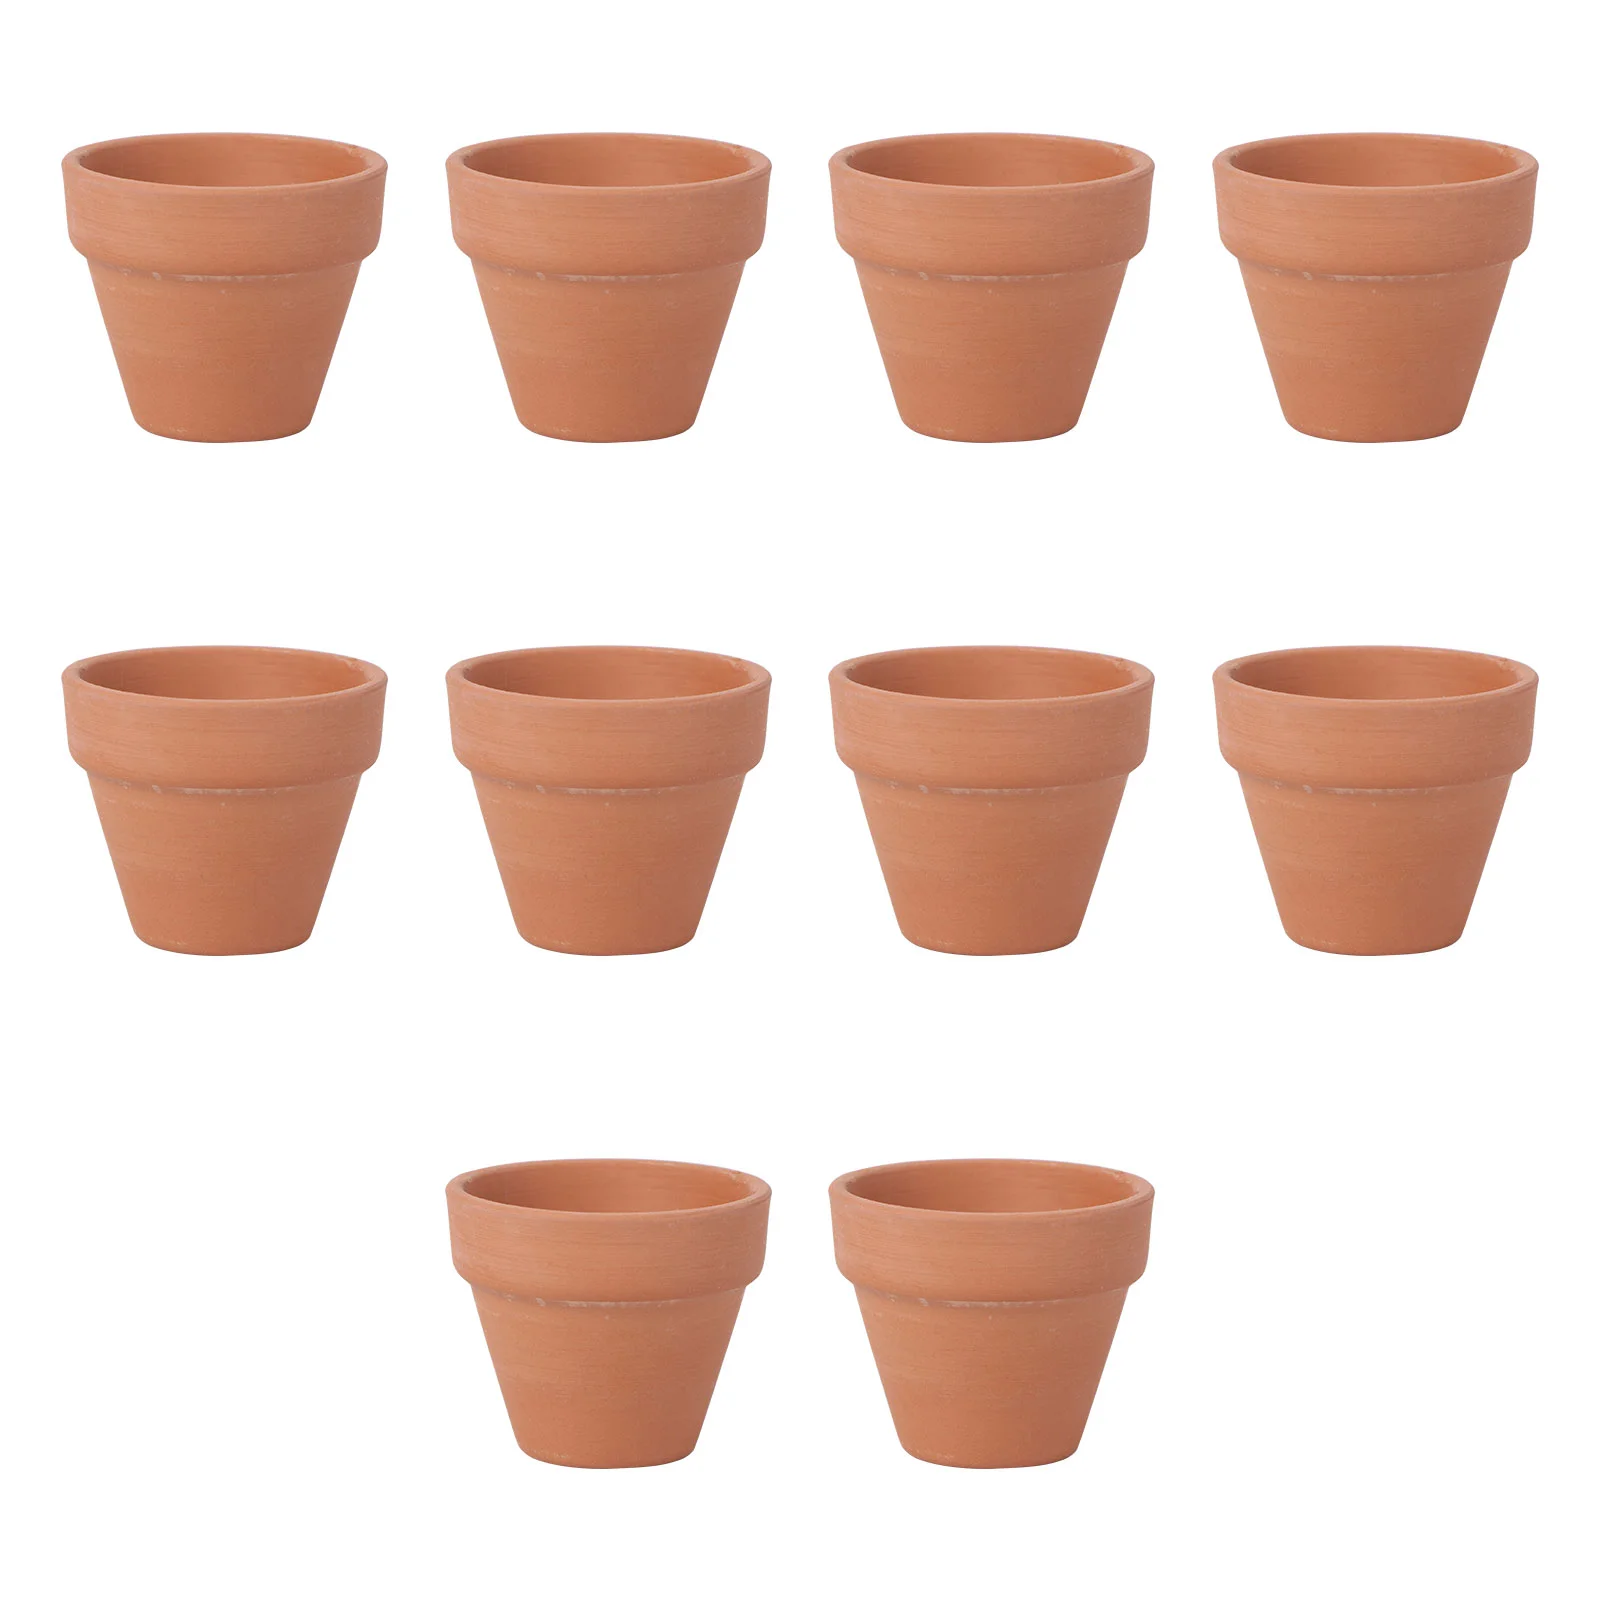 

4.5x4cm Small Mini Terracotta Pot Clay Ceramic Pottery Planter Flower Pots Succulent Nursery Pots Great For Plants Crafts